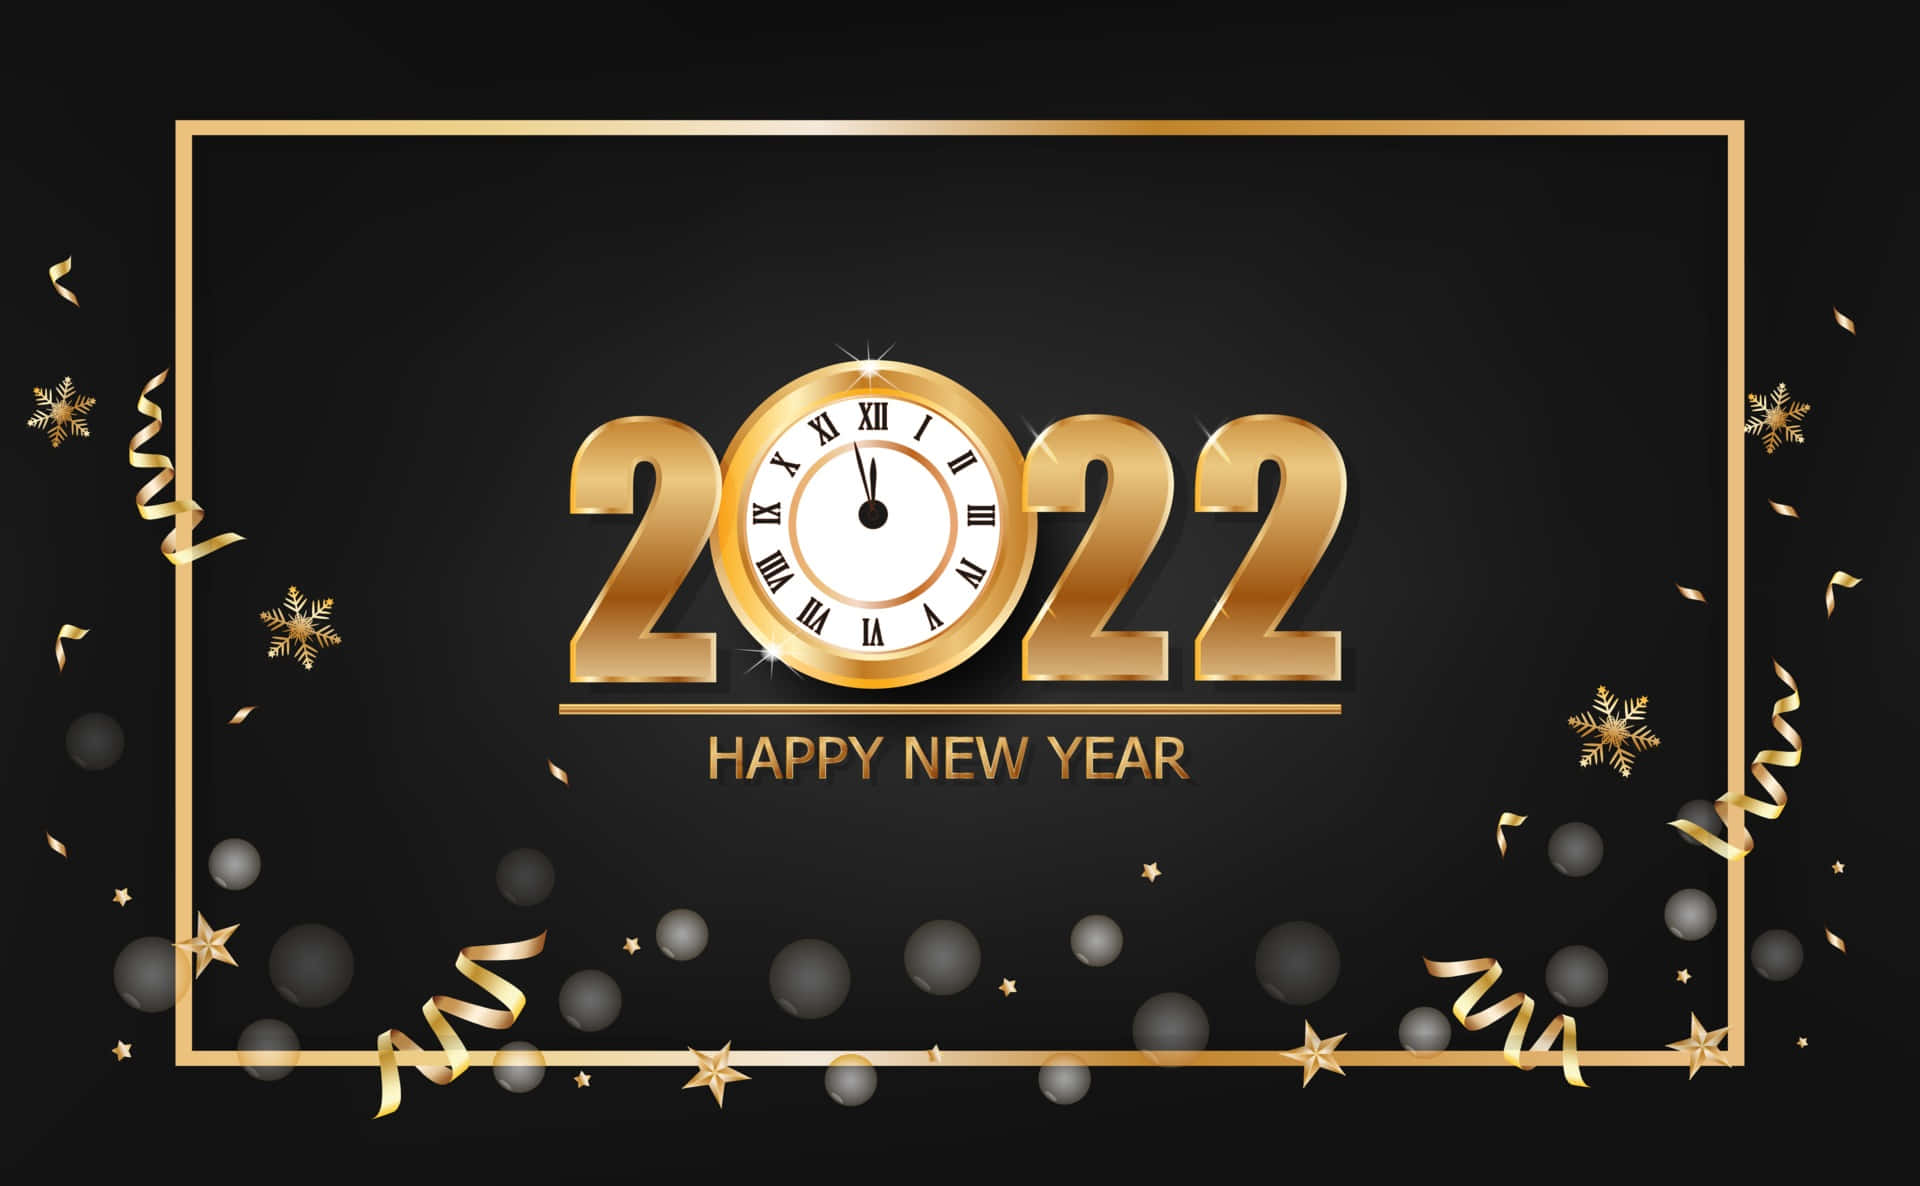 Ønskerdig Et Godt Nytår 2022!